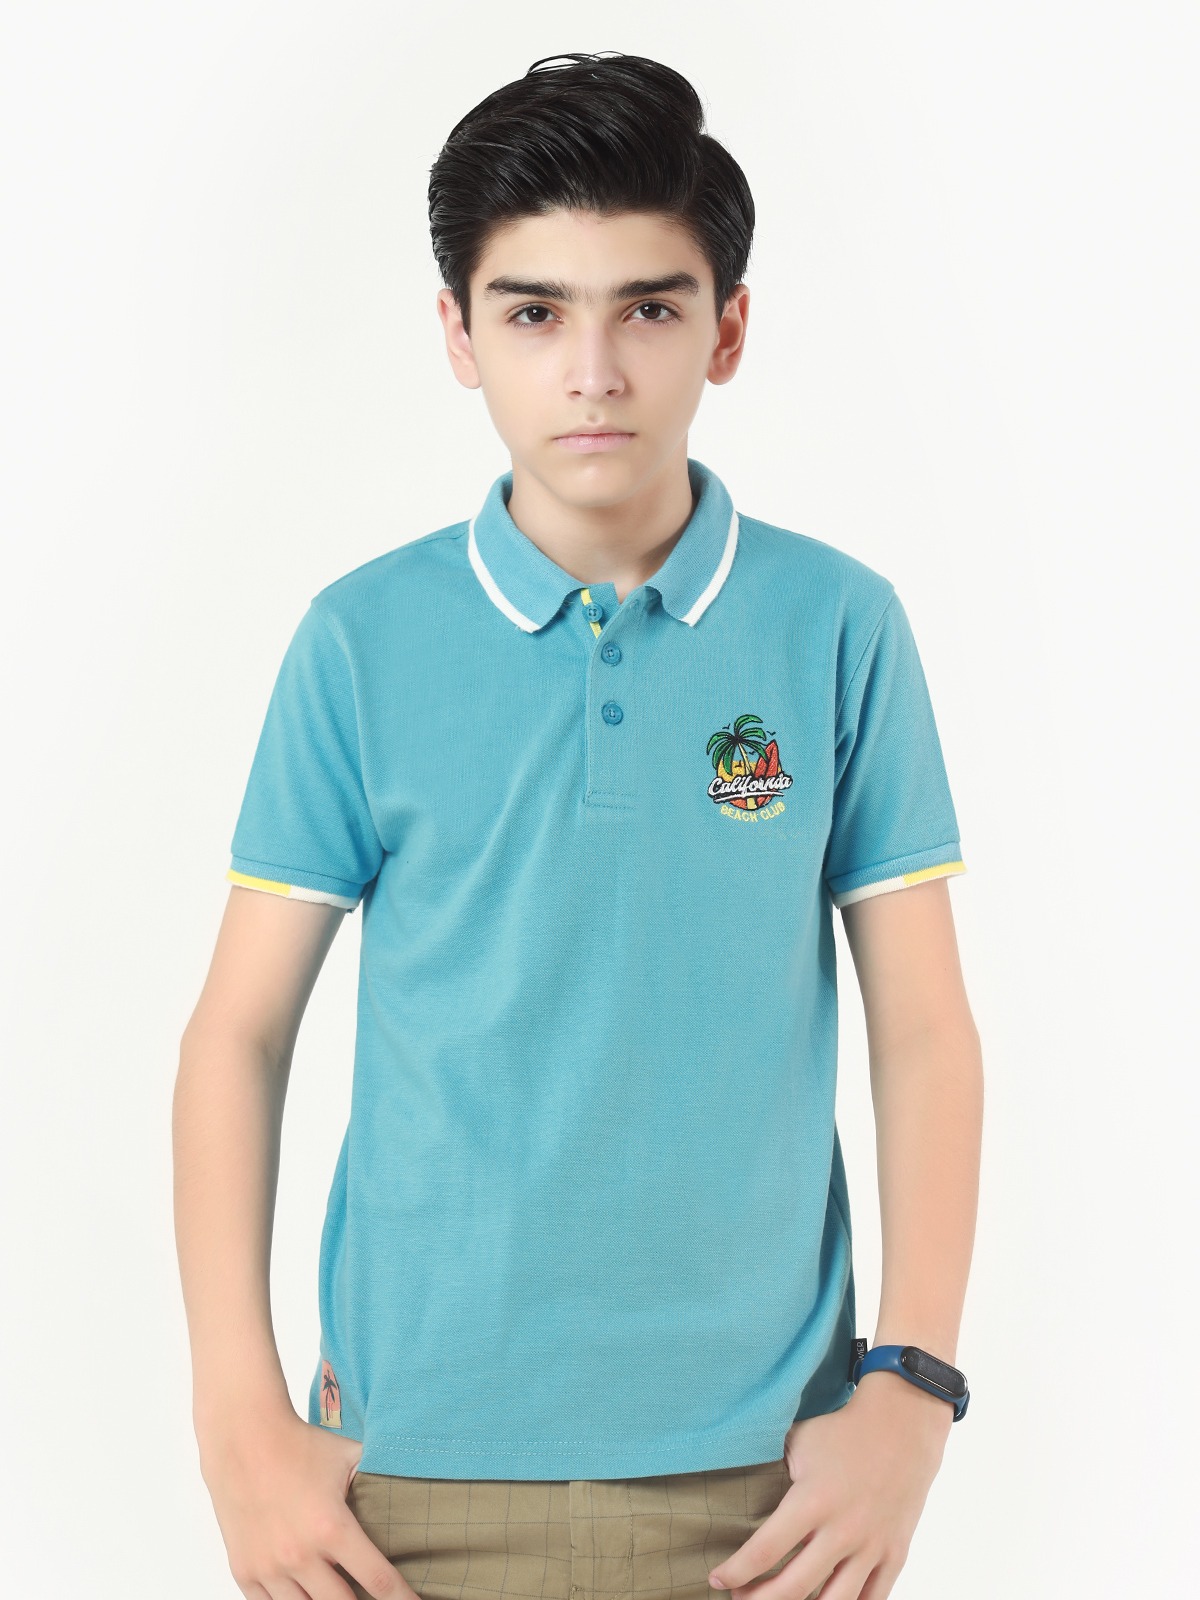 Boy's Light Blue Polo Shirt - EBTPS22-026